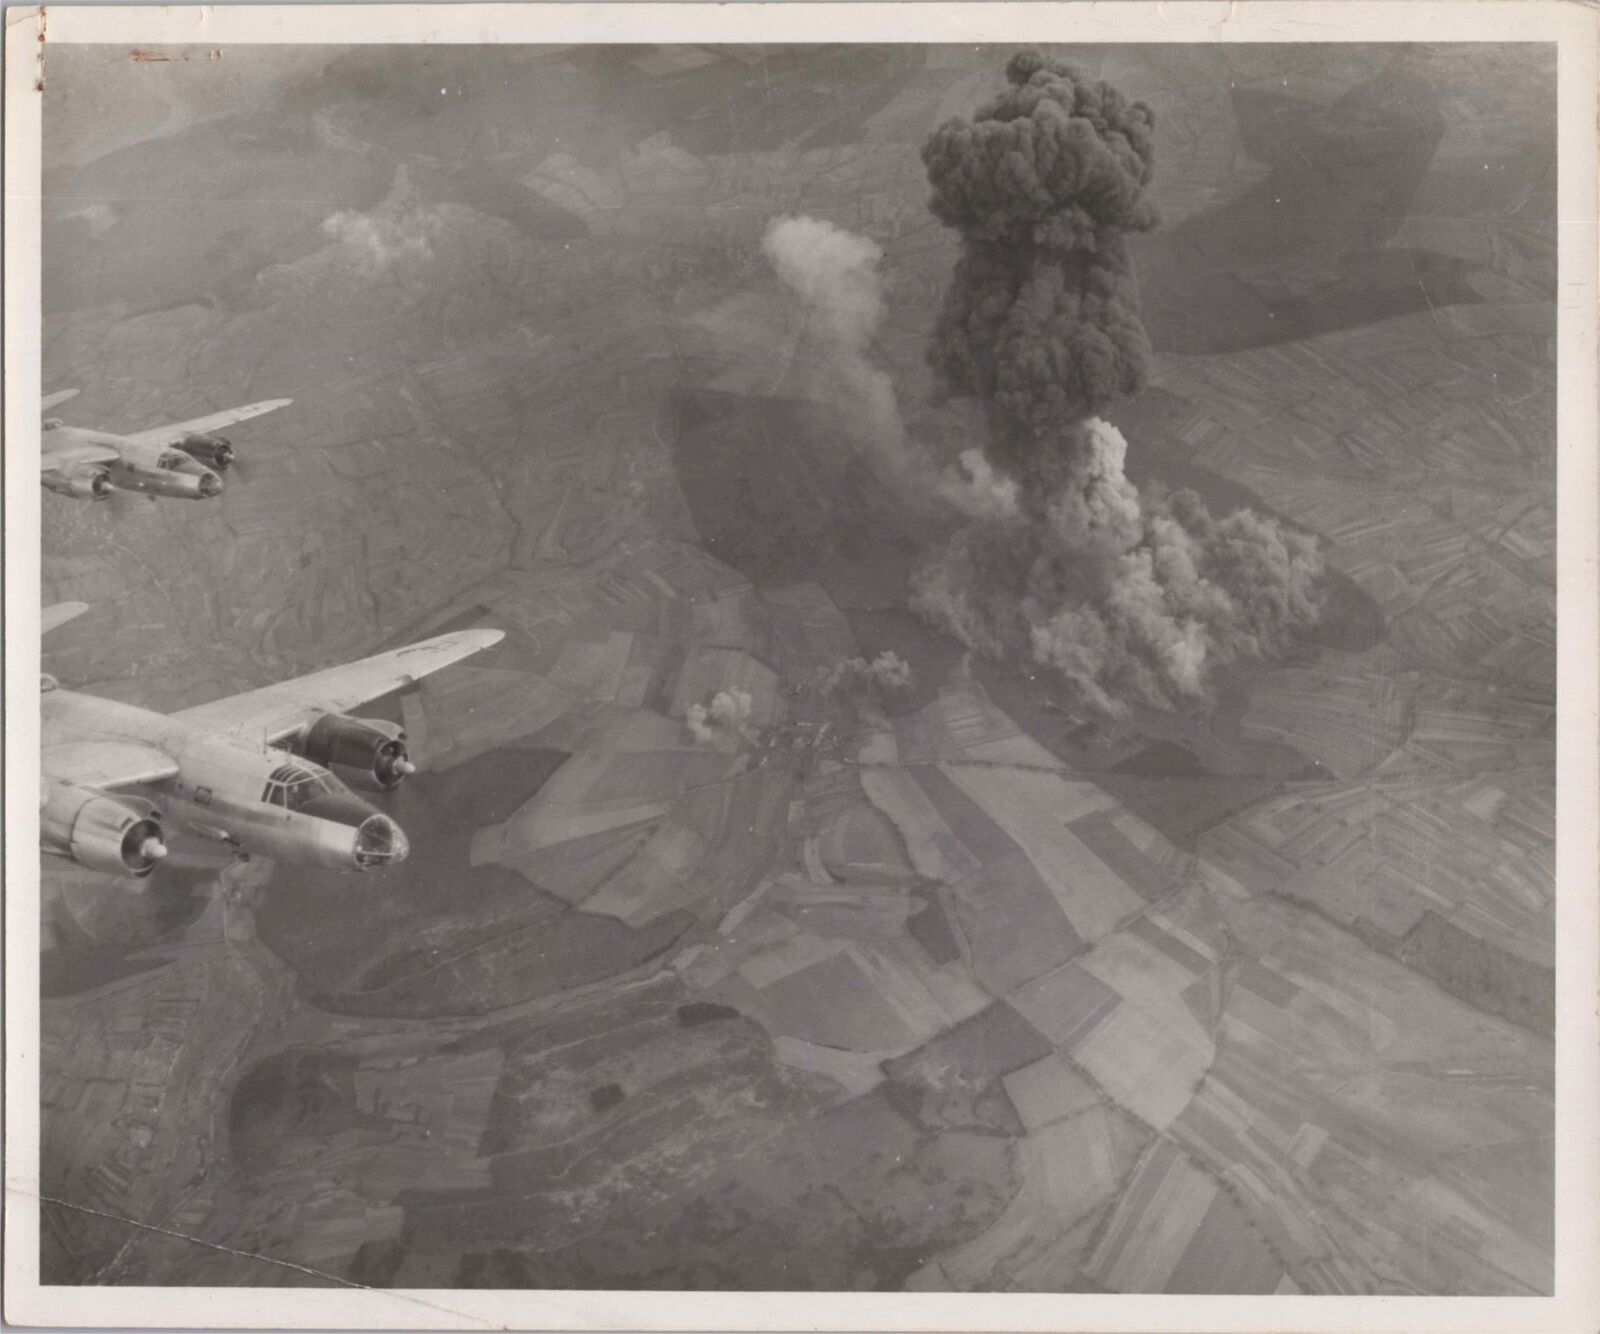 MARTIN B-26 MARAUDER ATTACK ORIGINAL VINTAGE WW2 PRESS PHOTO CENSOR STAMP